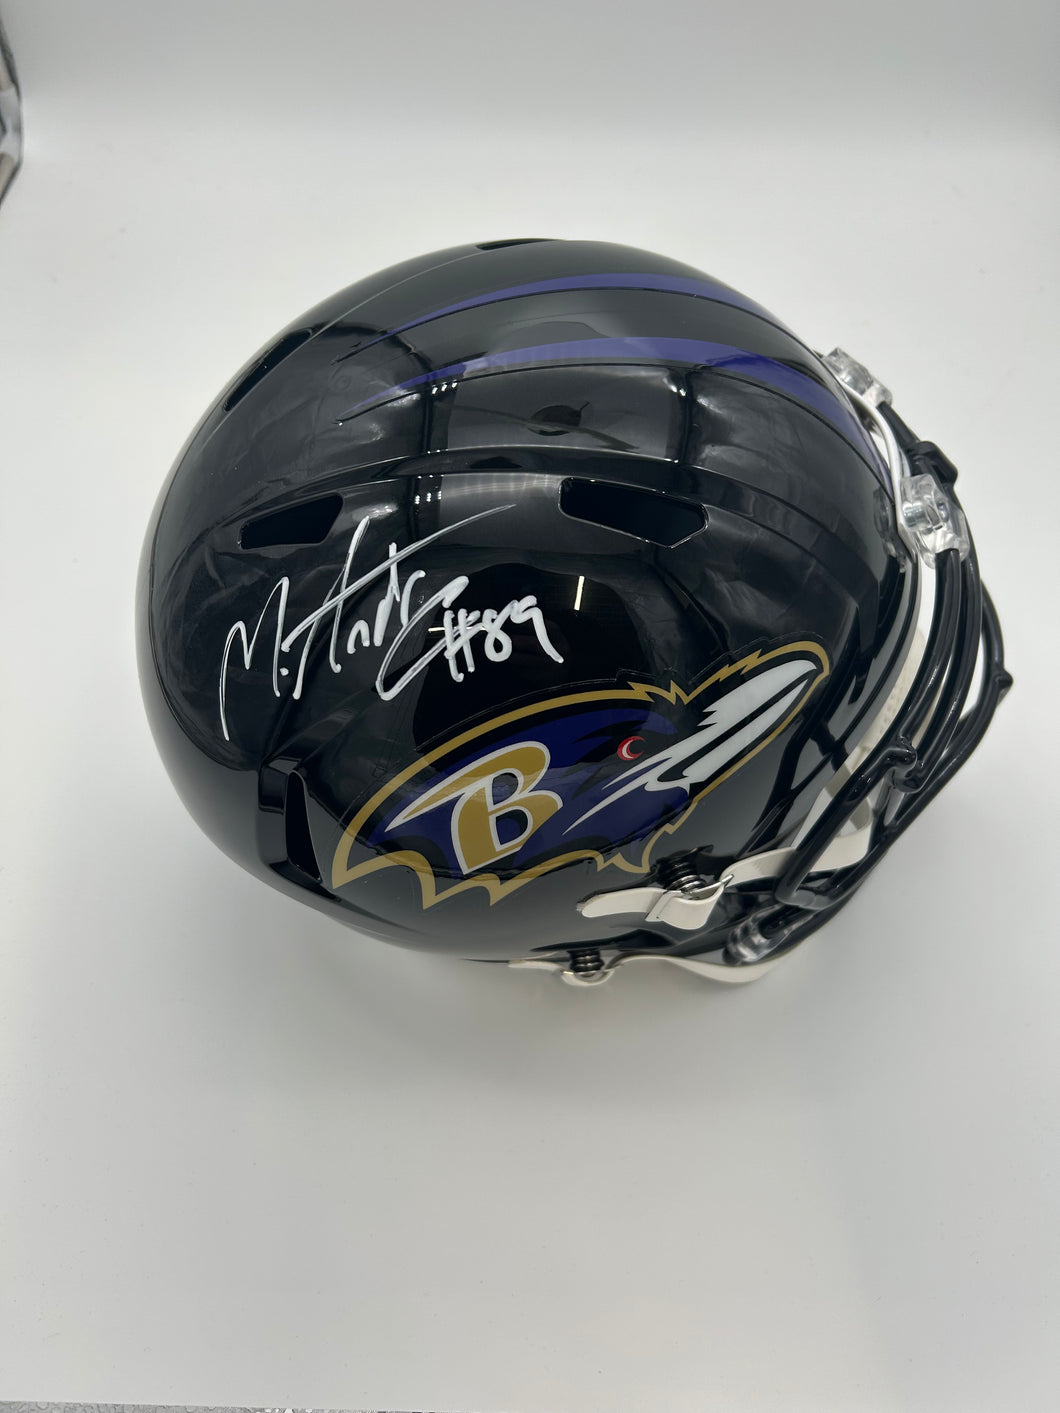 Mark Andrews signed replica helmet